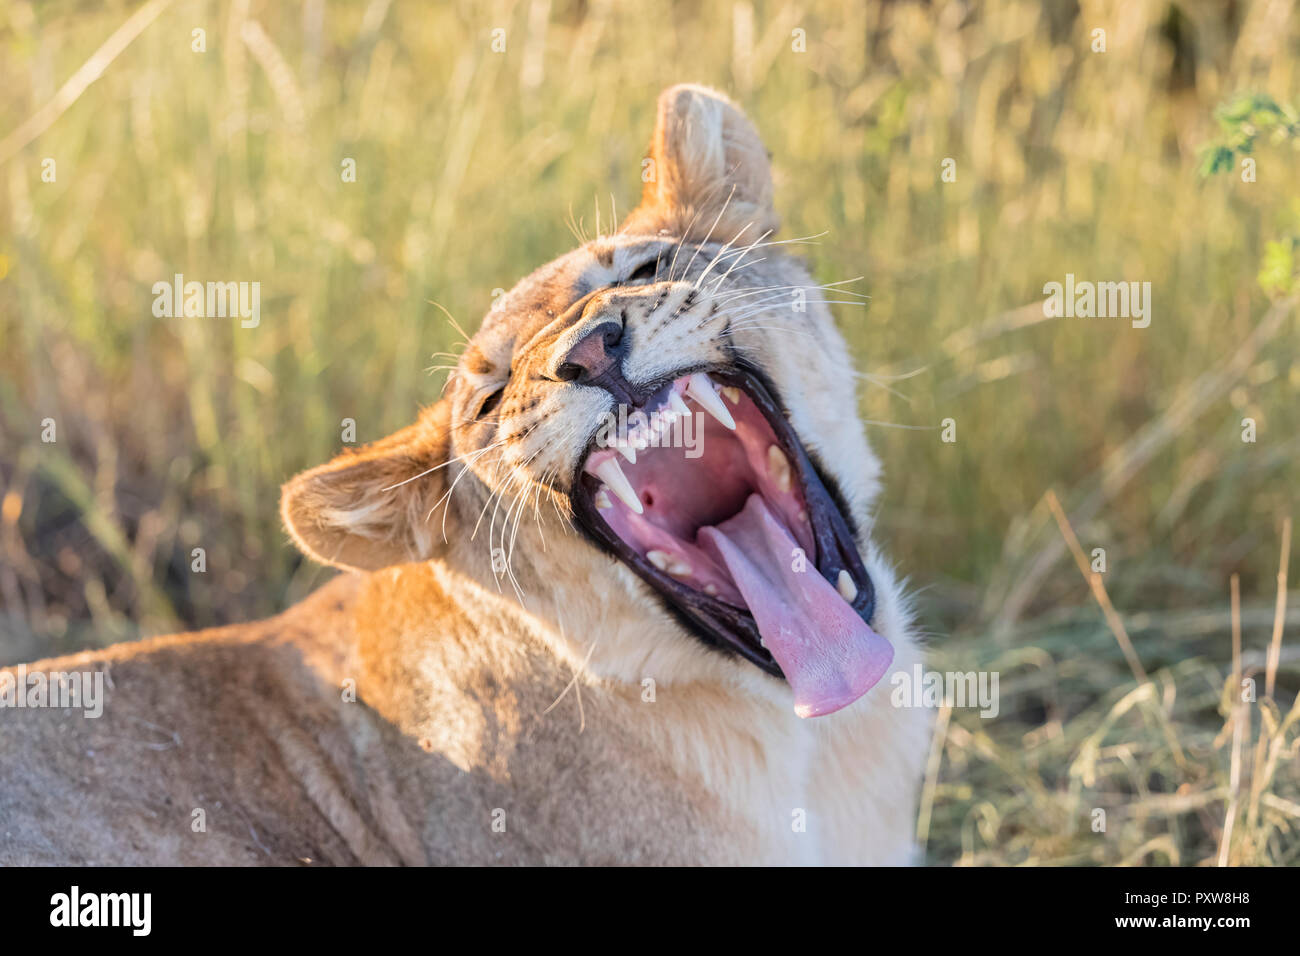 Botswana, Kgalagadi Transfrontier Park, lion, Panthera leo, young animal yawning Stock Photo